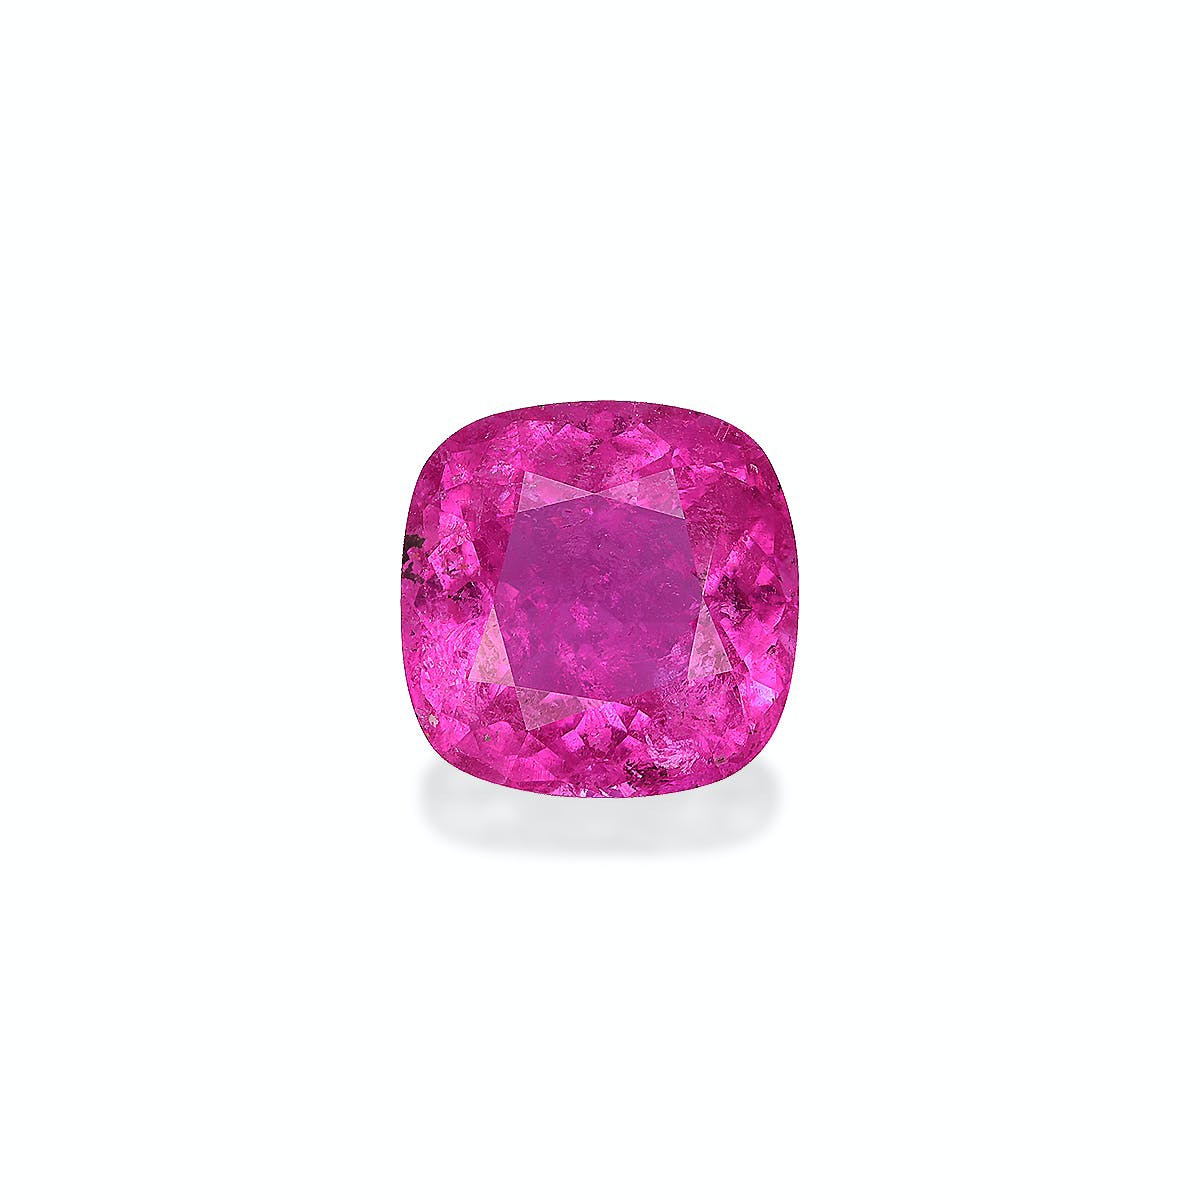 Picture of Vivid Pink Rubellite Tourmaline 6.97ct - 12mm (RL1212)